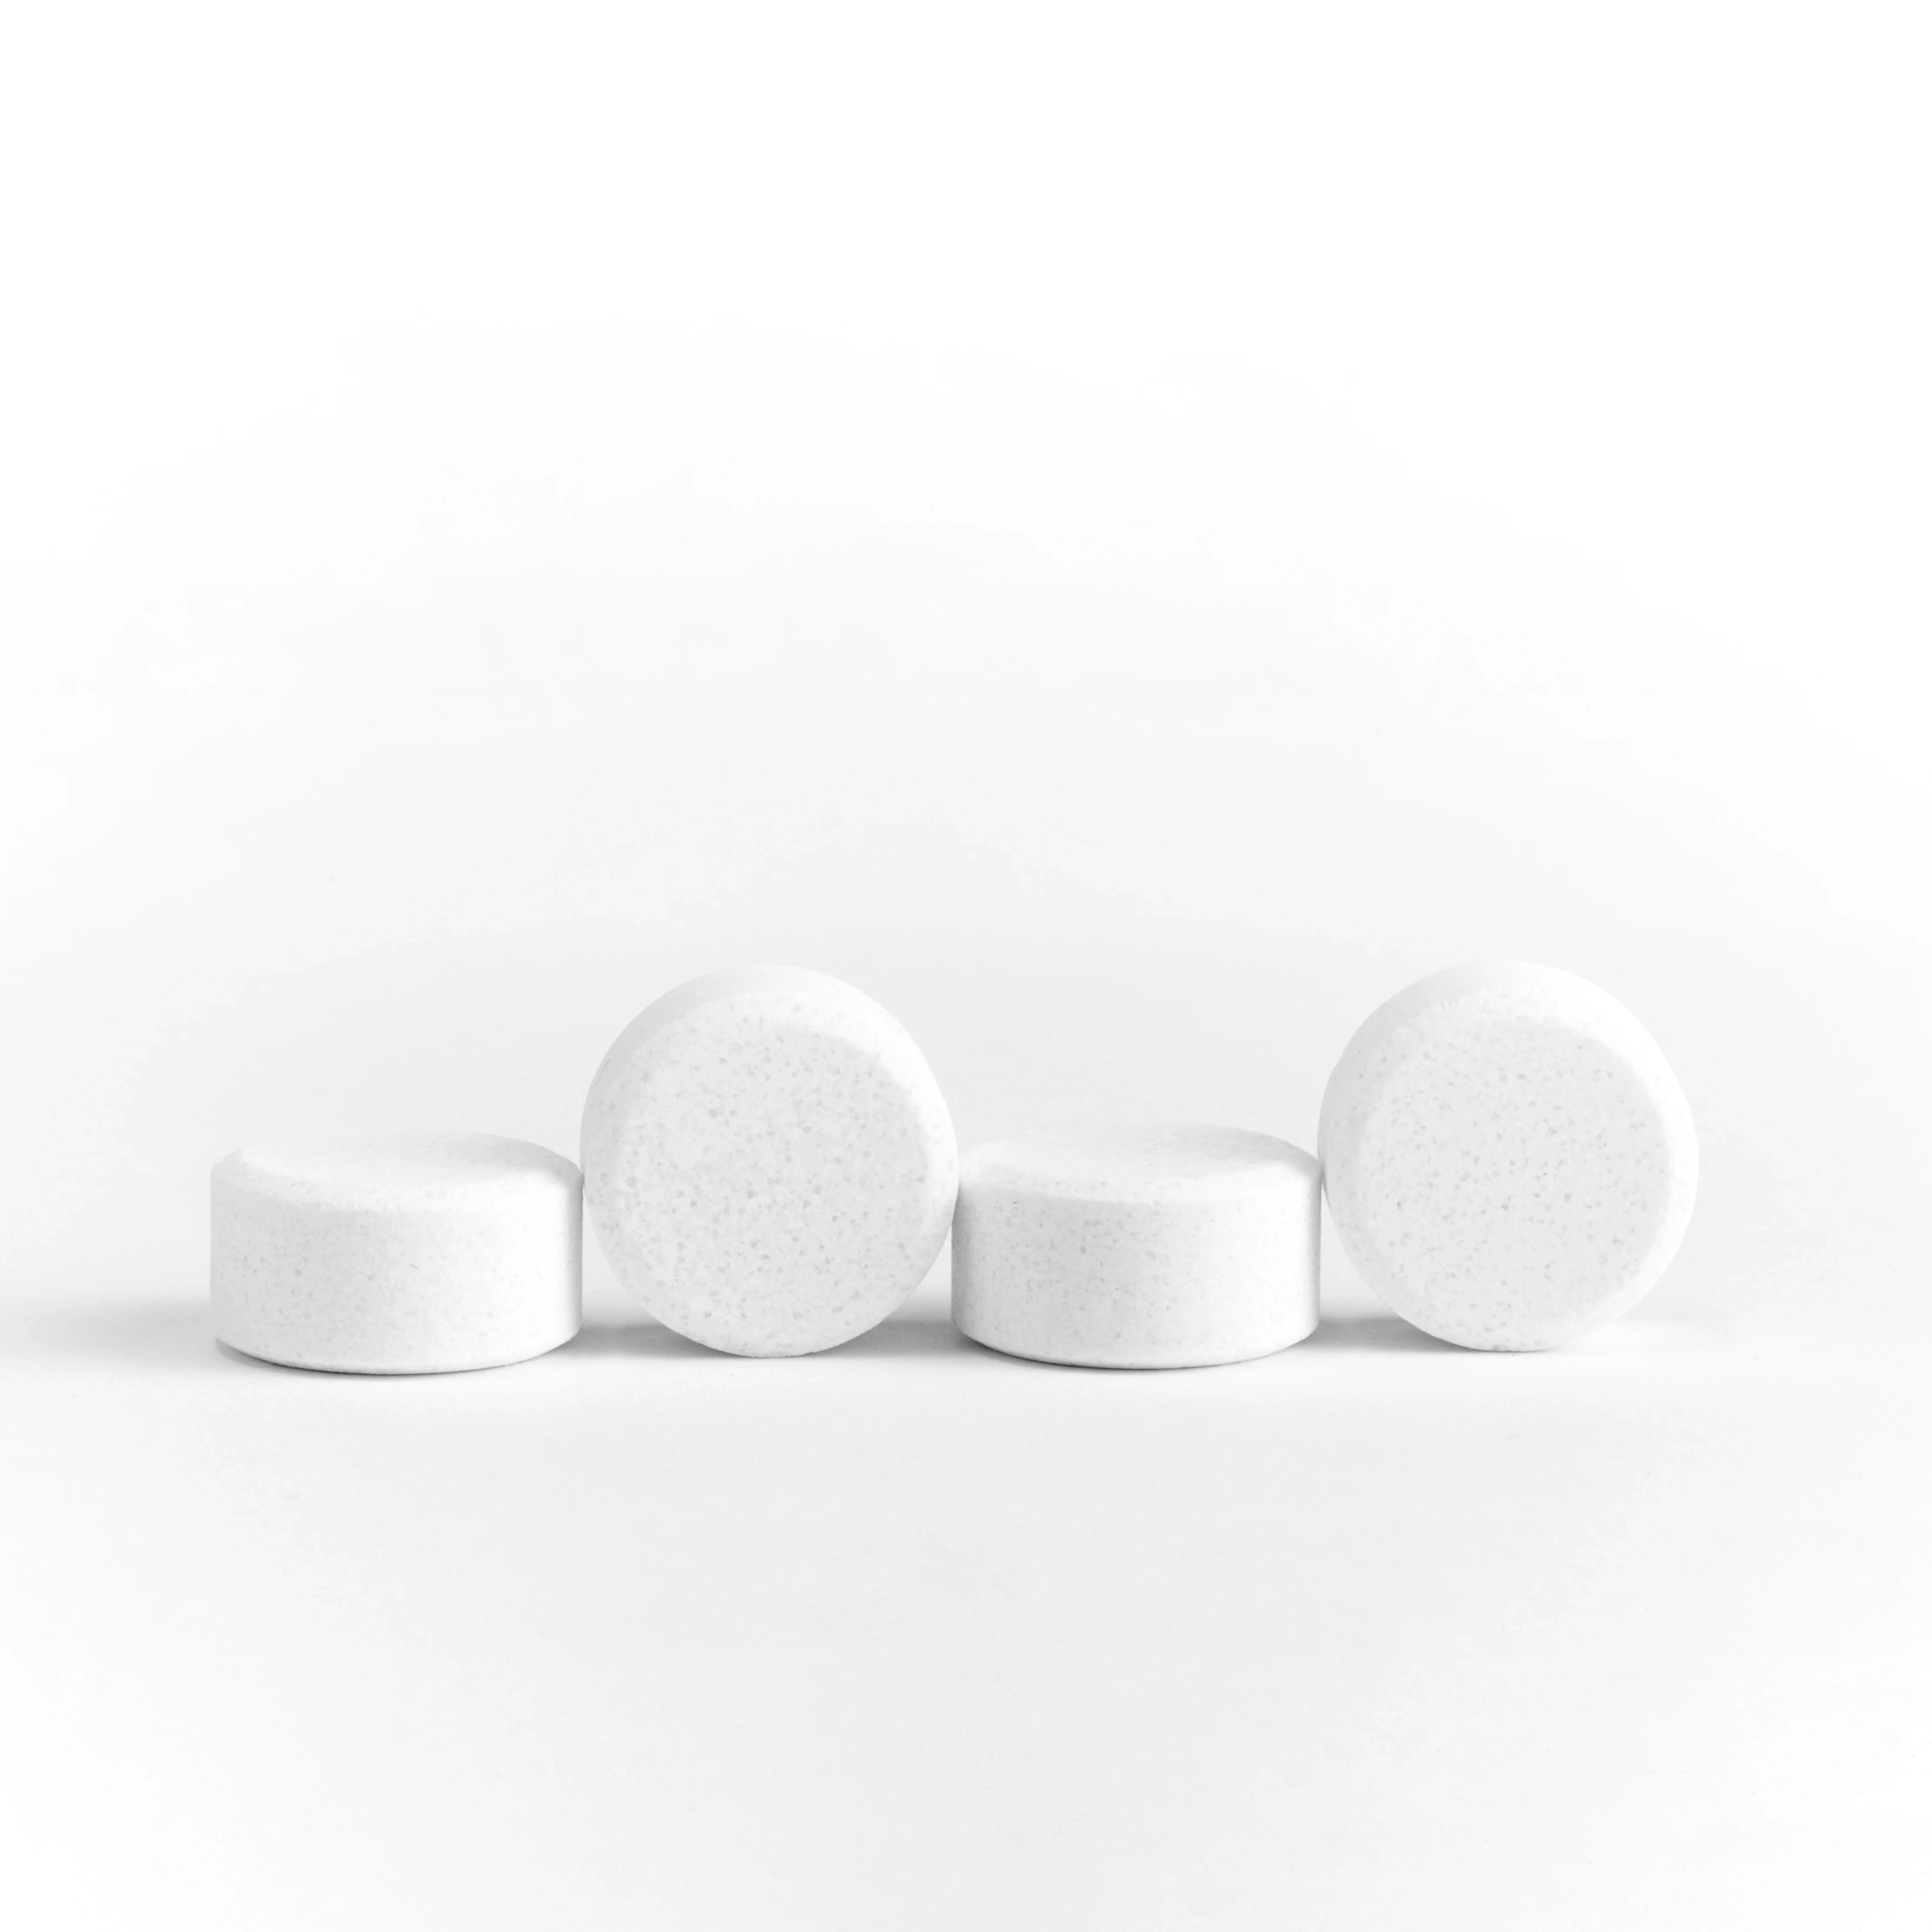 Bottle Cleaning Tablet - 6-pack set (4 pills per pack)